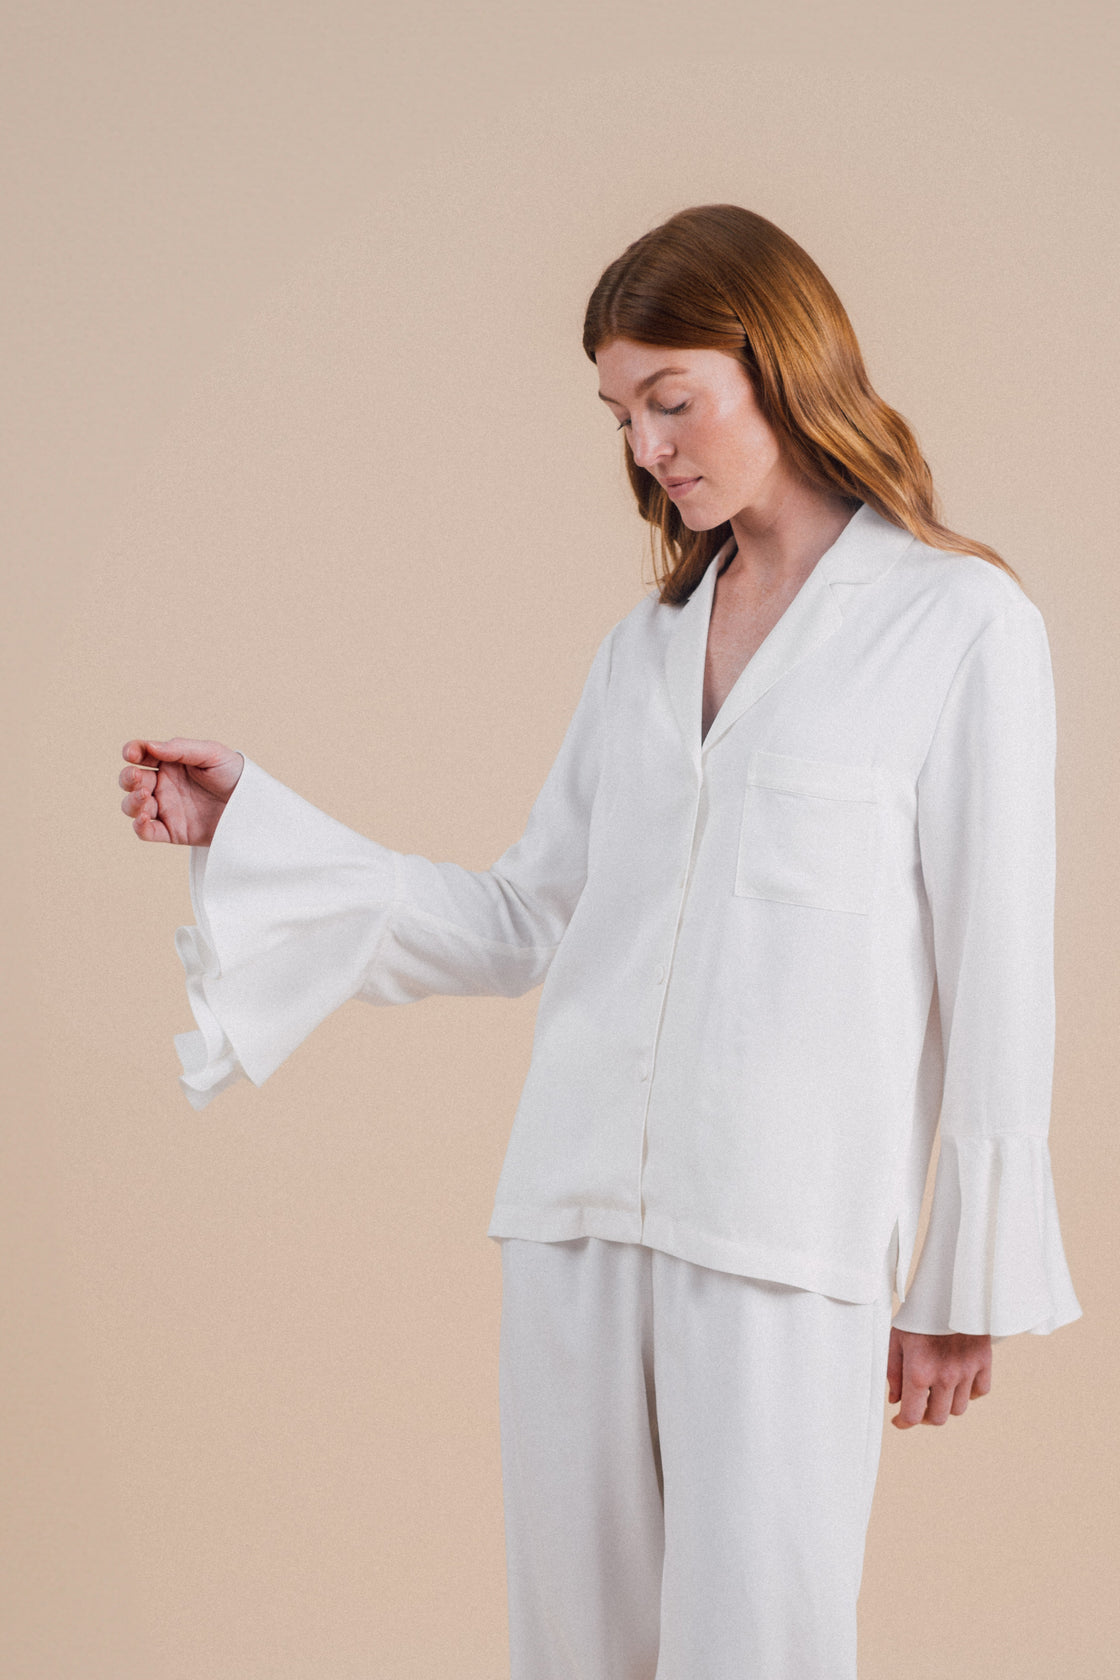 Soft & Breathable Modal Pajama Set, Lace Contrast Ruffle Hem Sleeve Loose  Tops & Pants, Women's Sleepwear & Loungewear